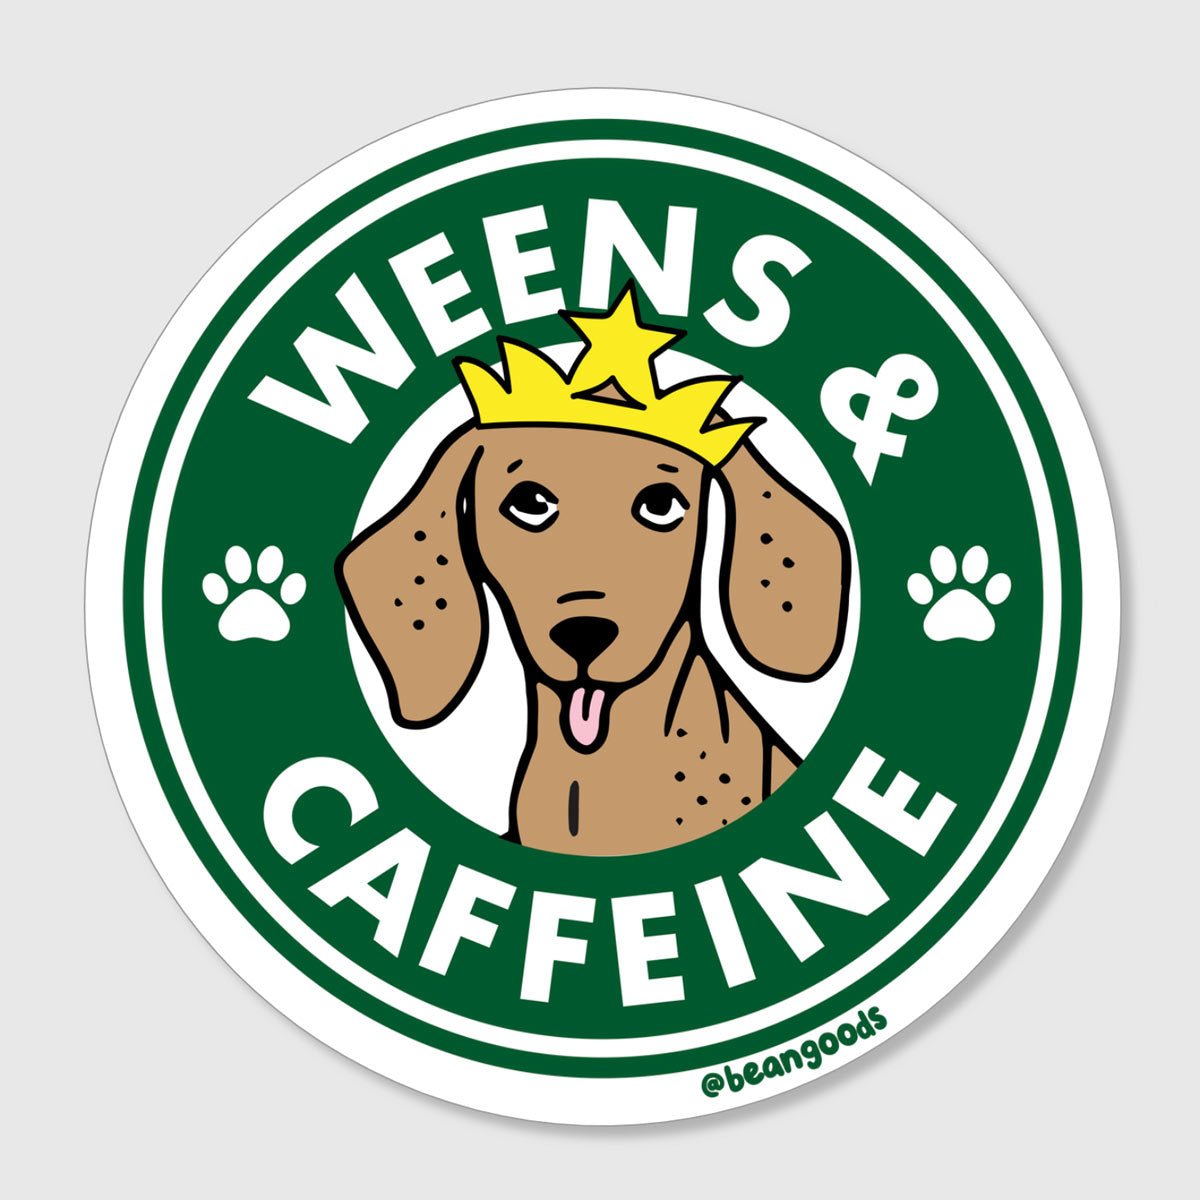 weens & caffeine sticker - bean goods